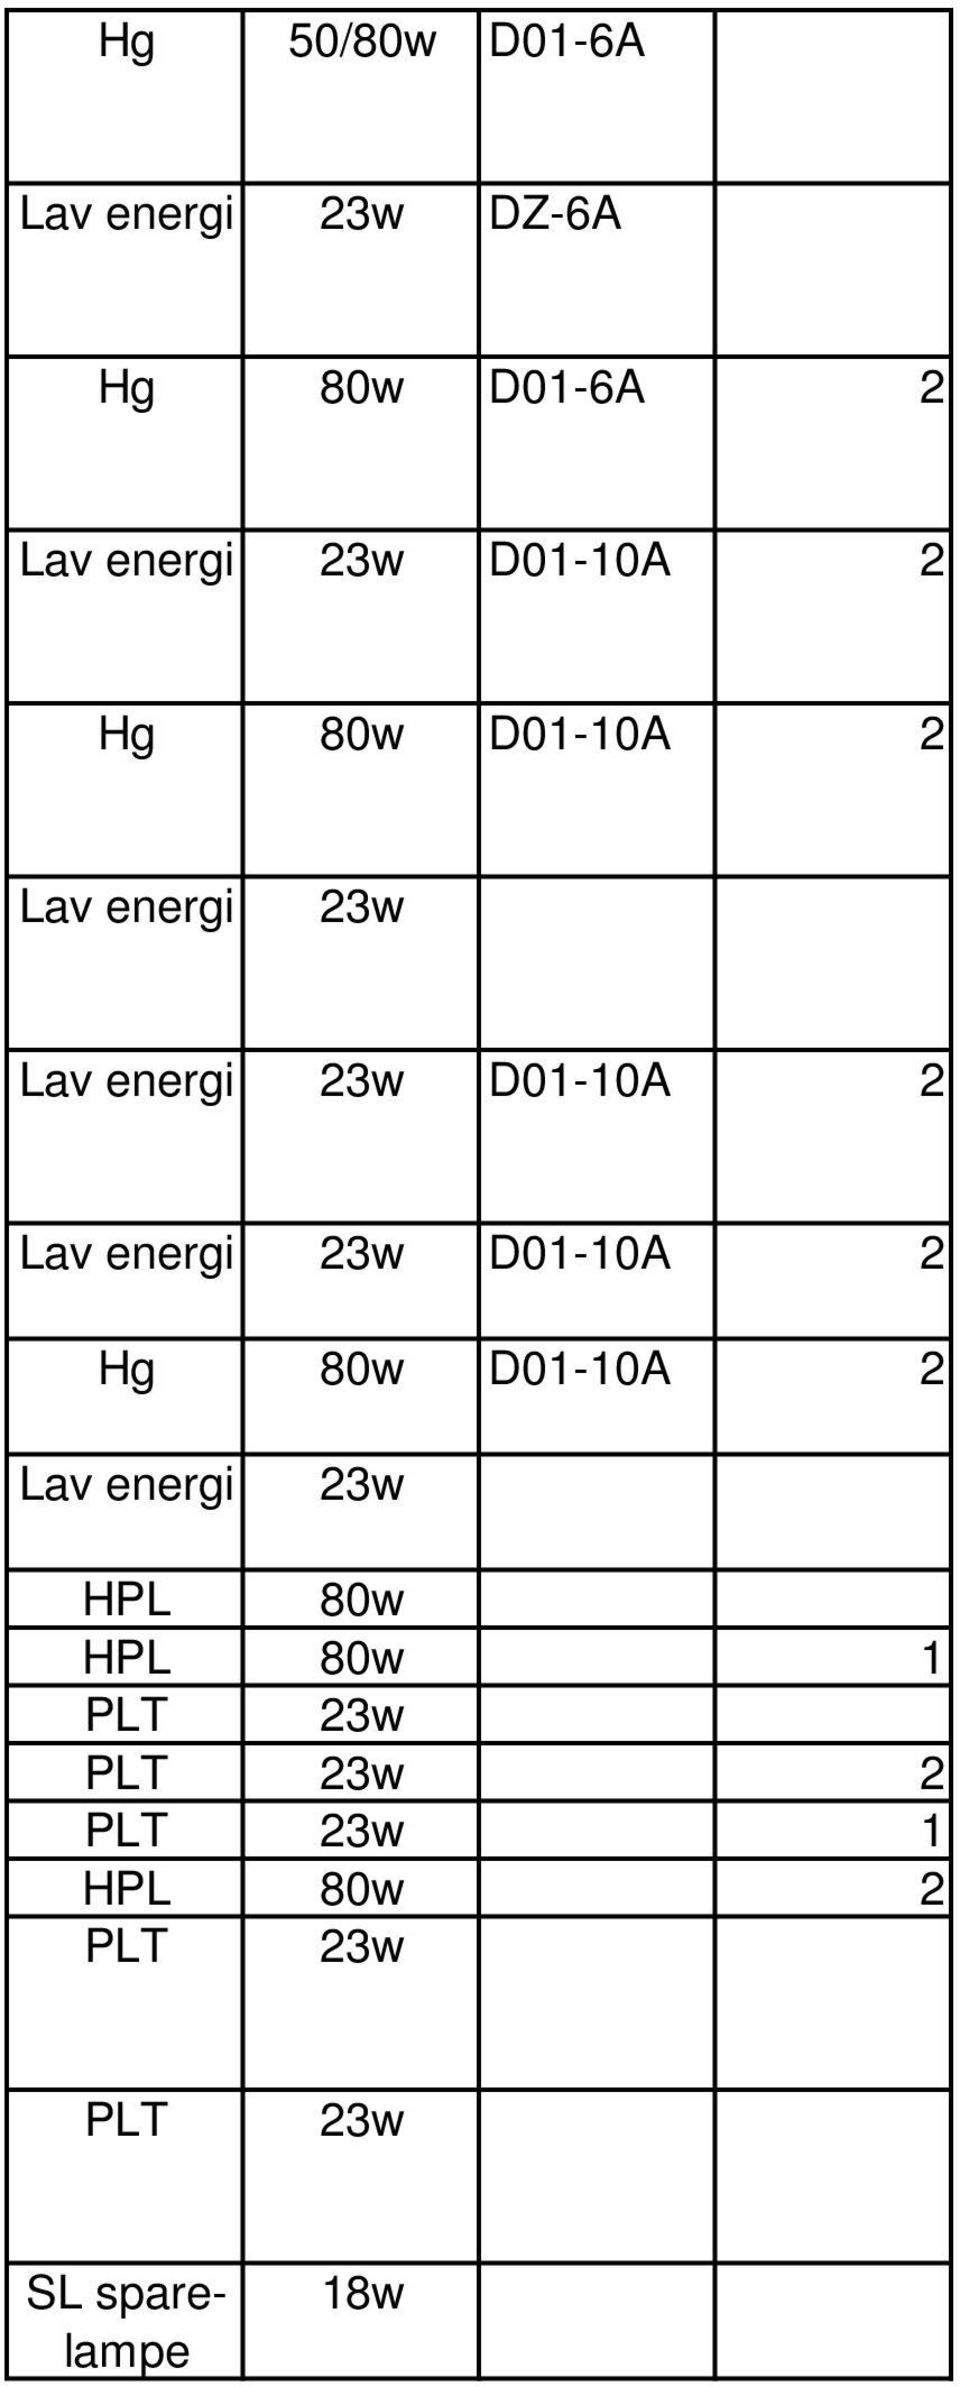 Lav energi 23w D01-10A 2 Hg D01-10A 2 Lav energi 23w HPL HPL 1